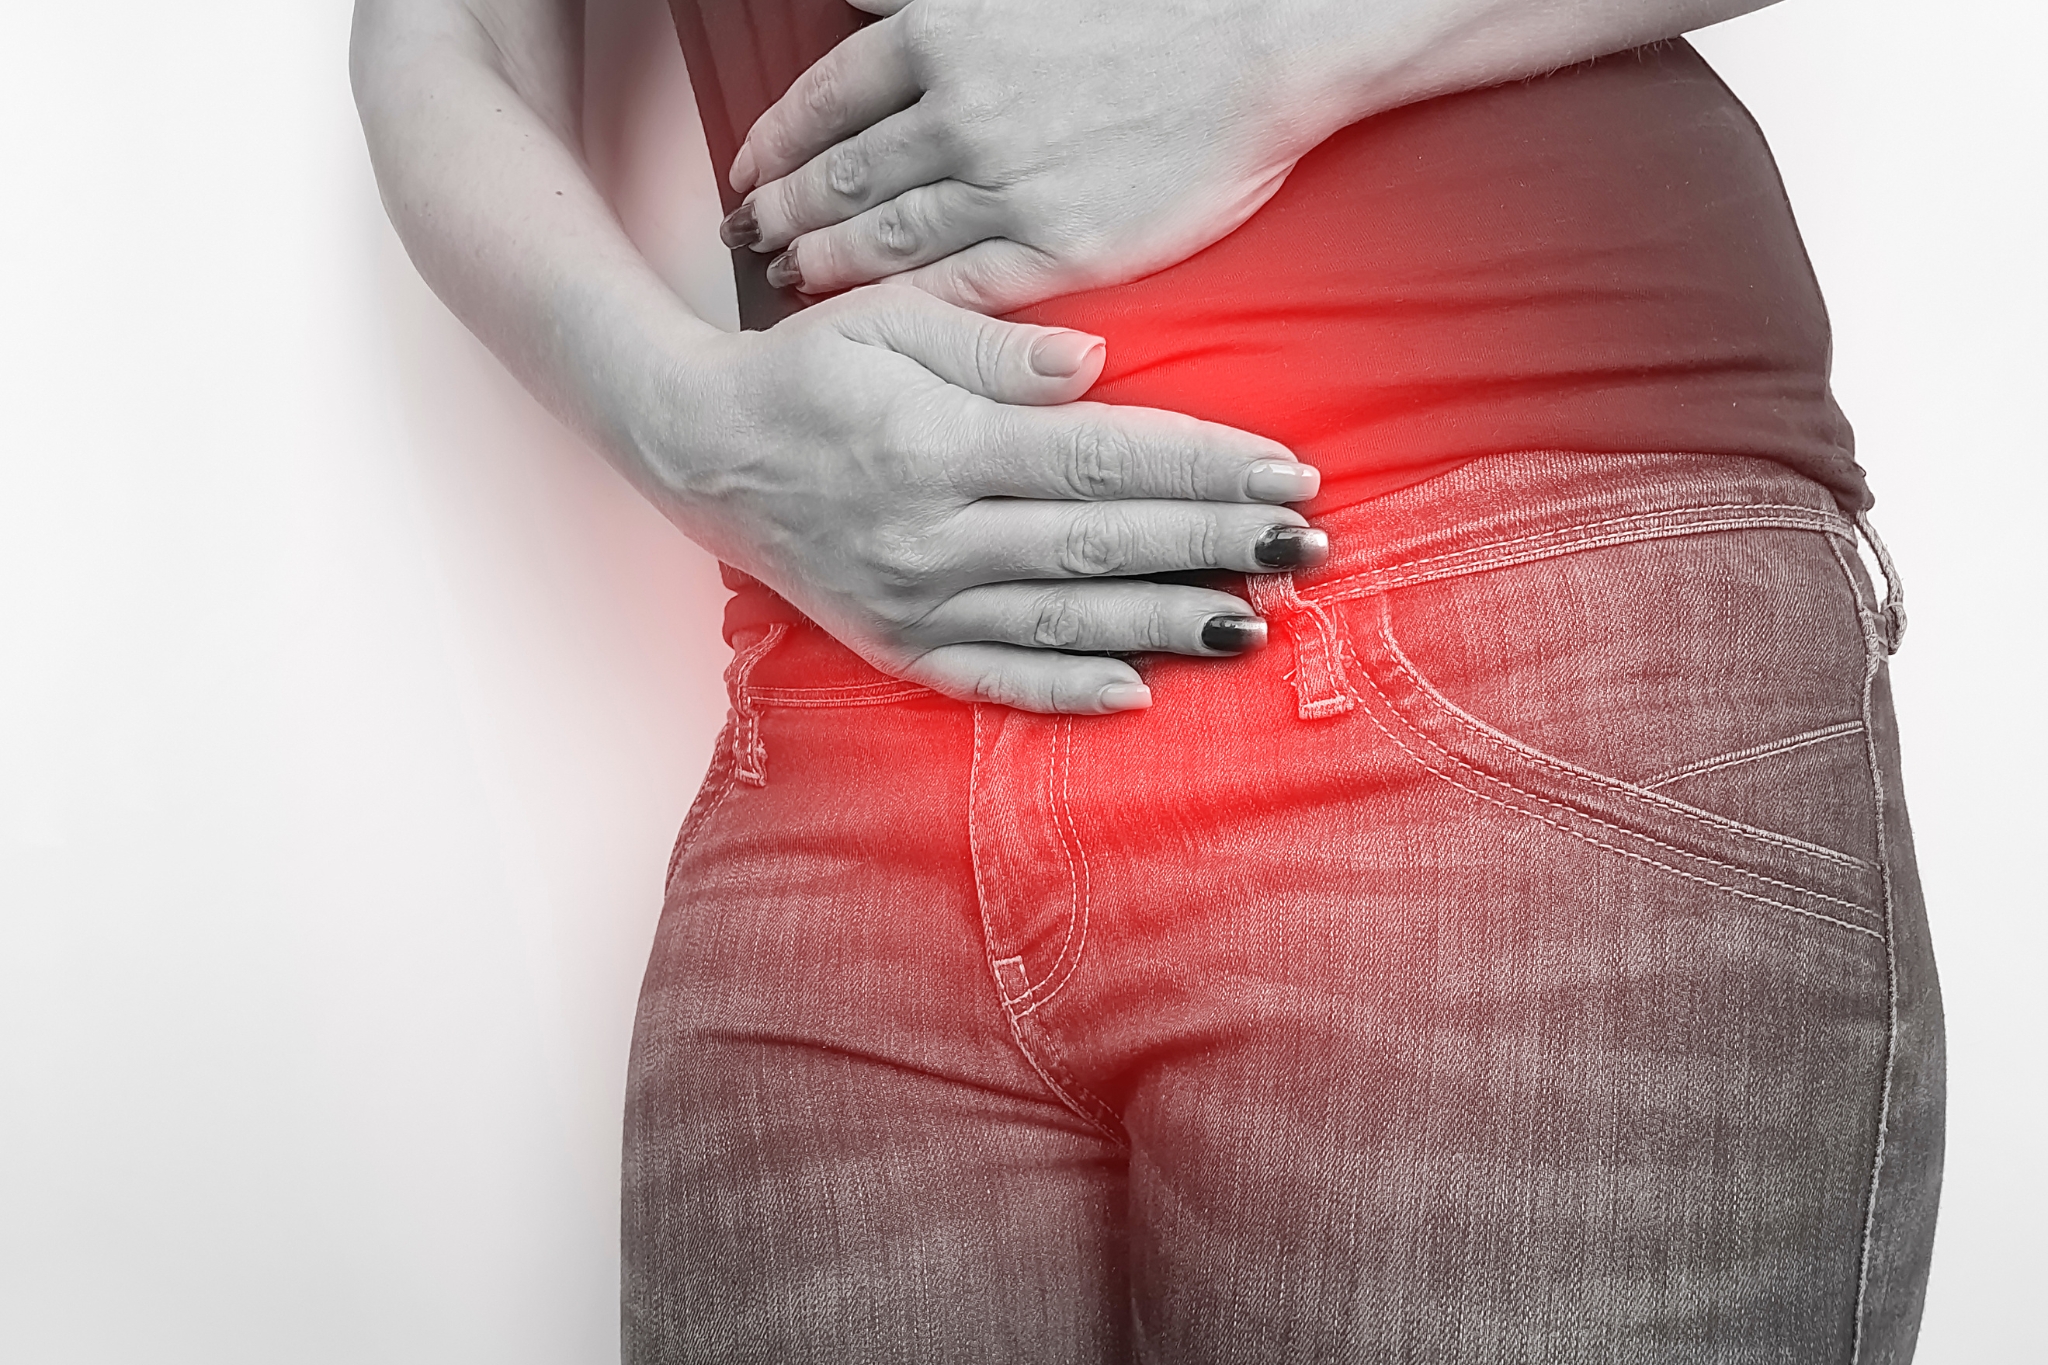 STD - woman abdominal pain